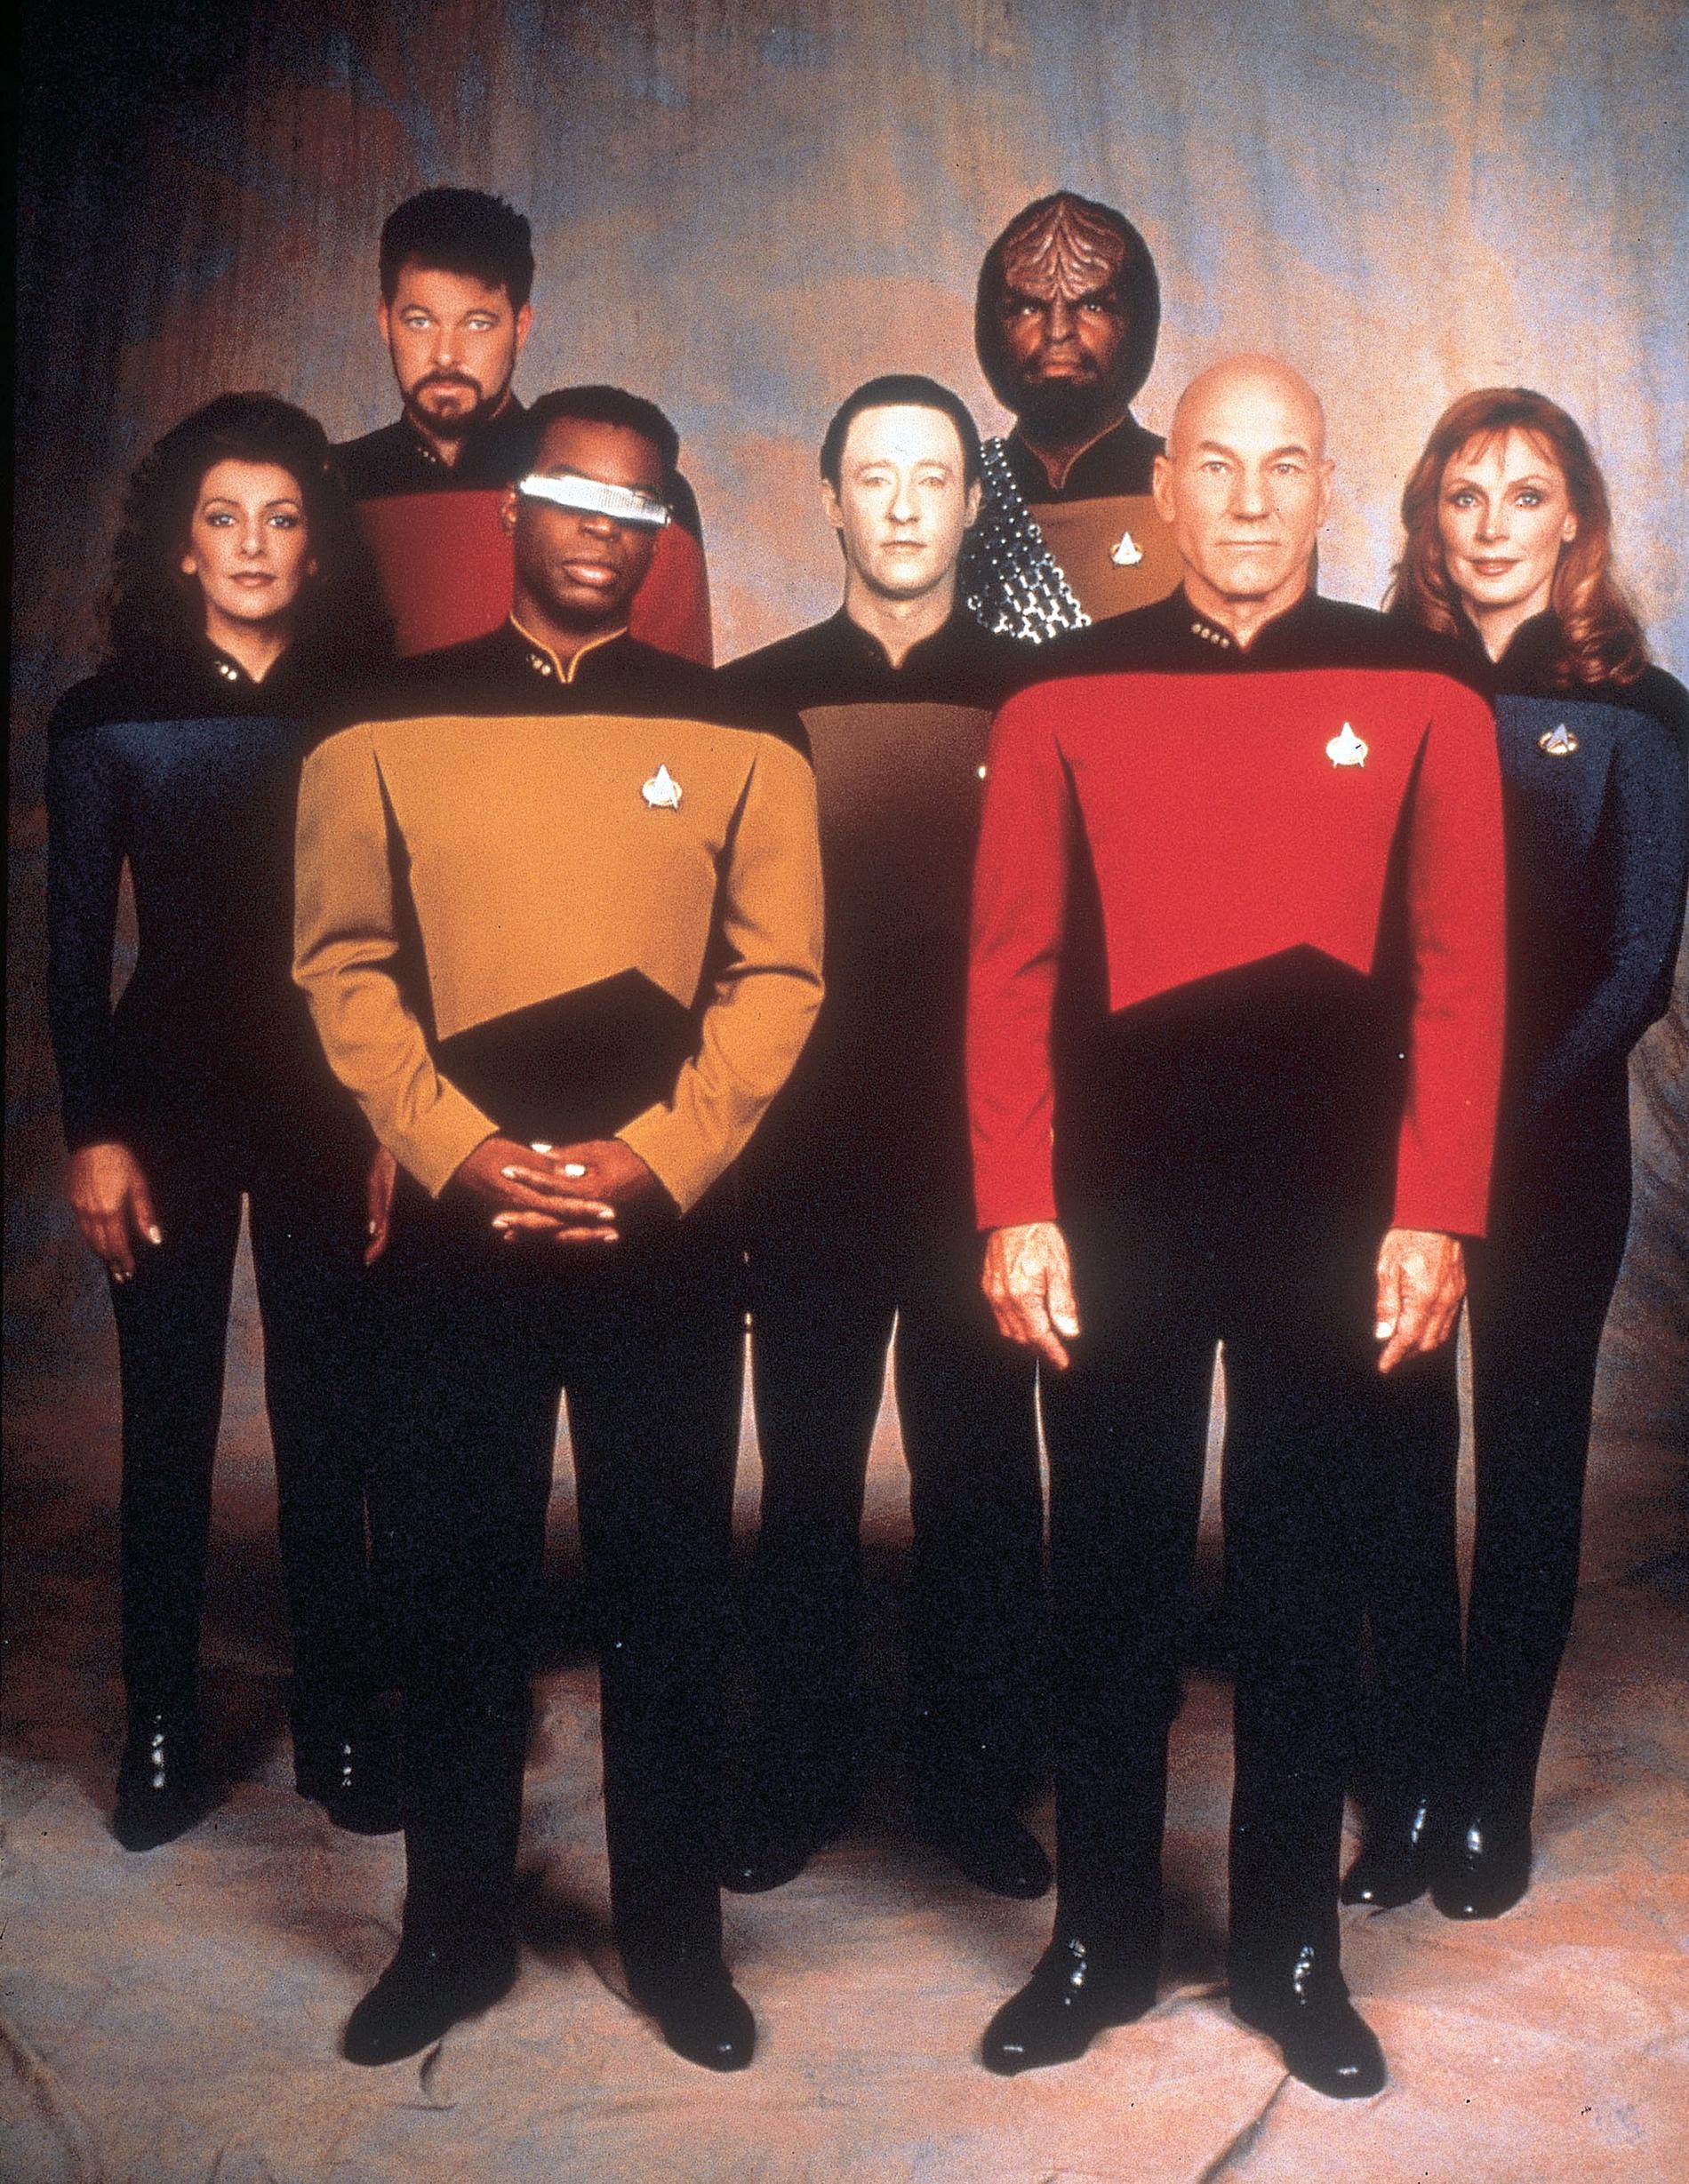 ”Star Trek: The next generation”